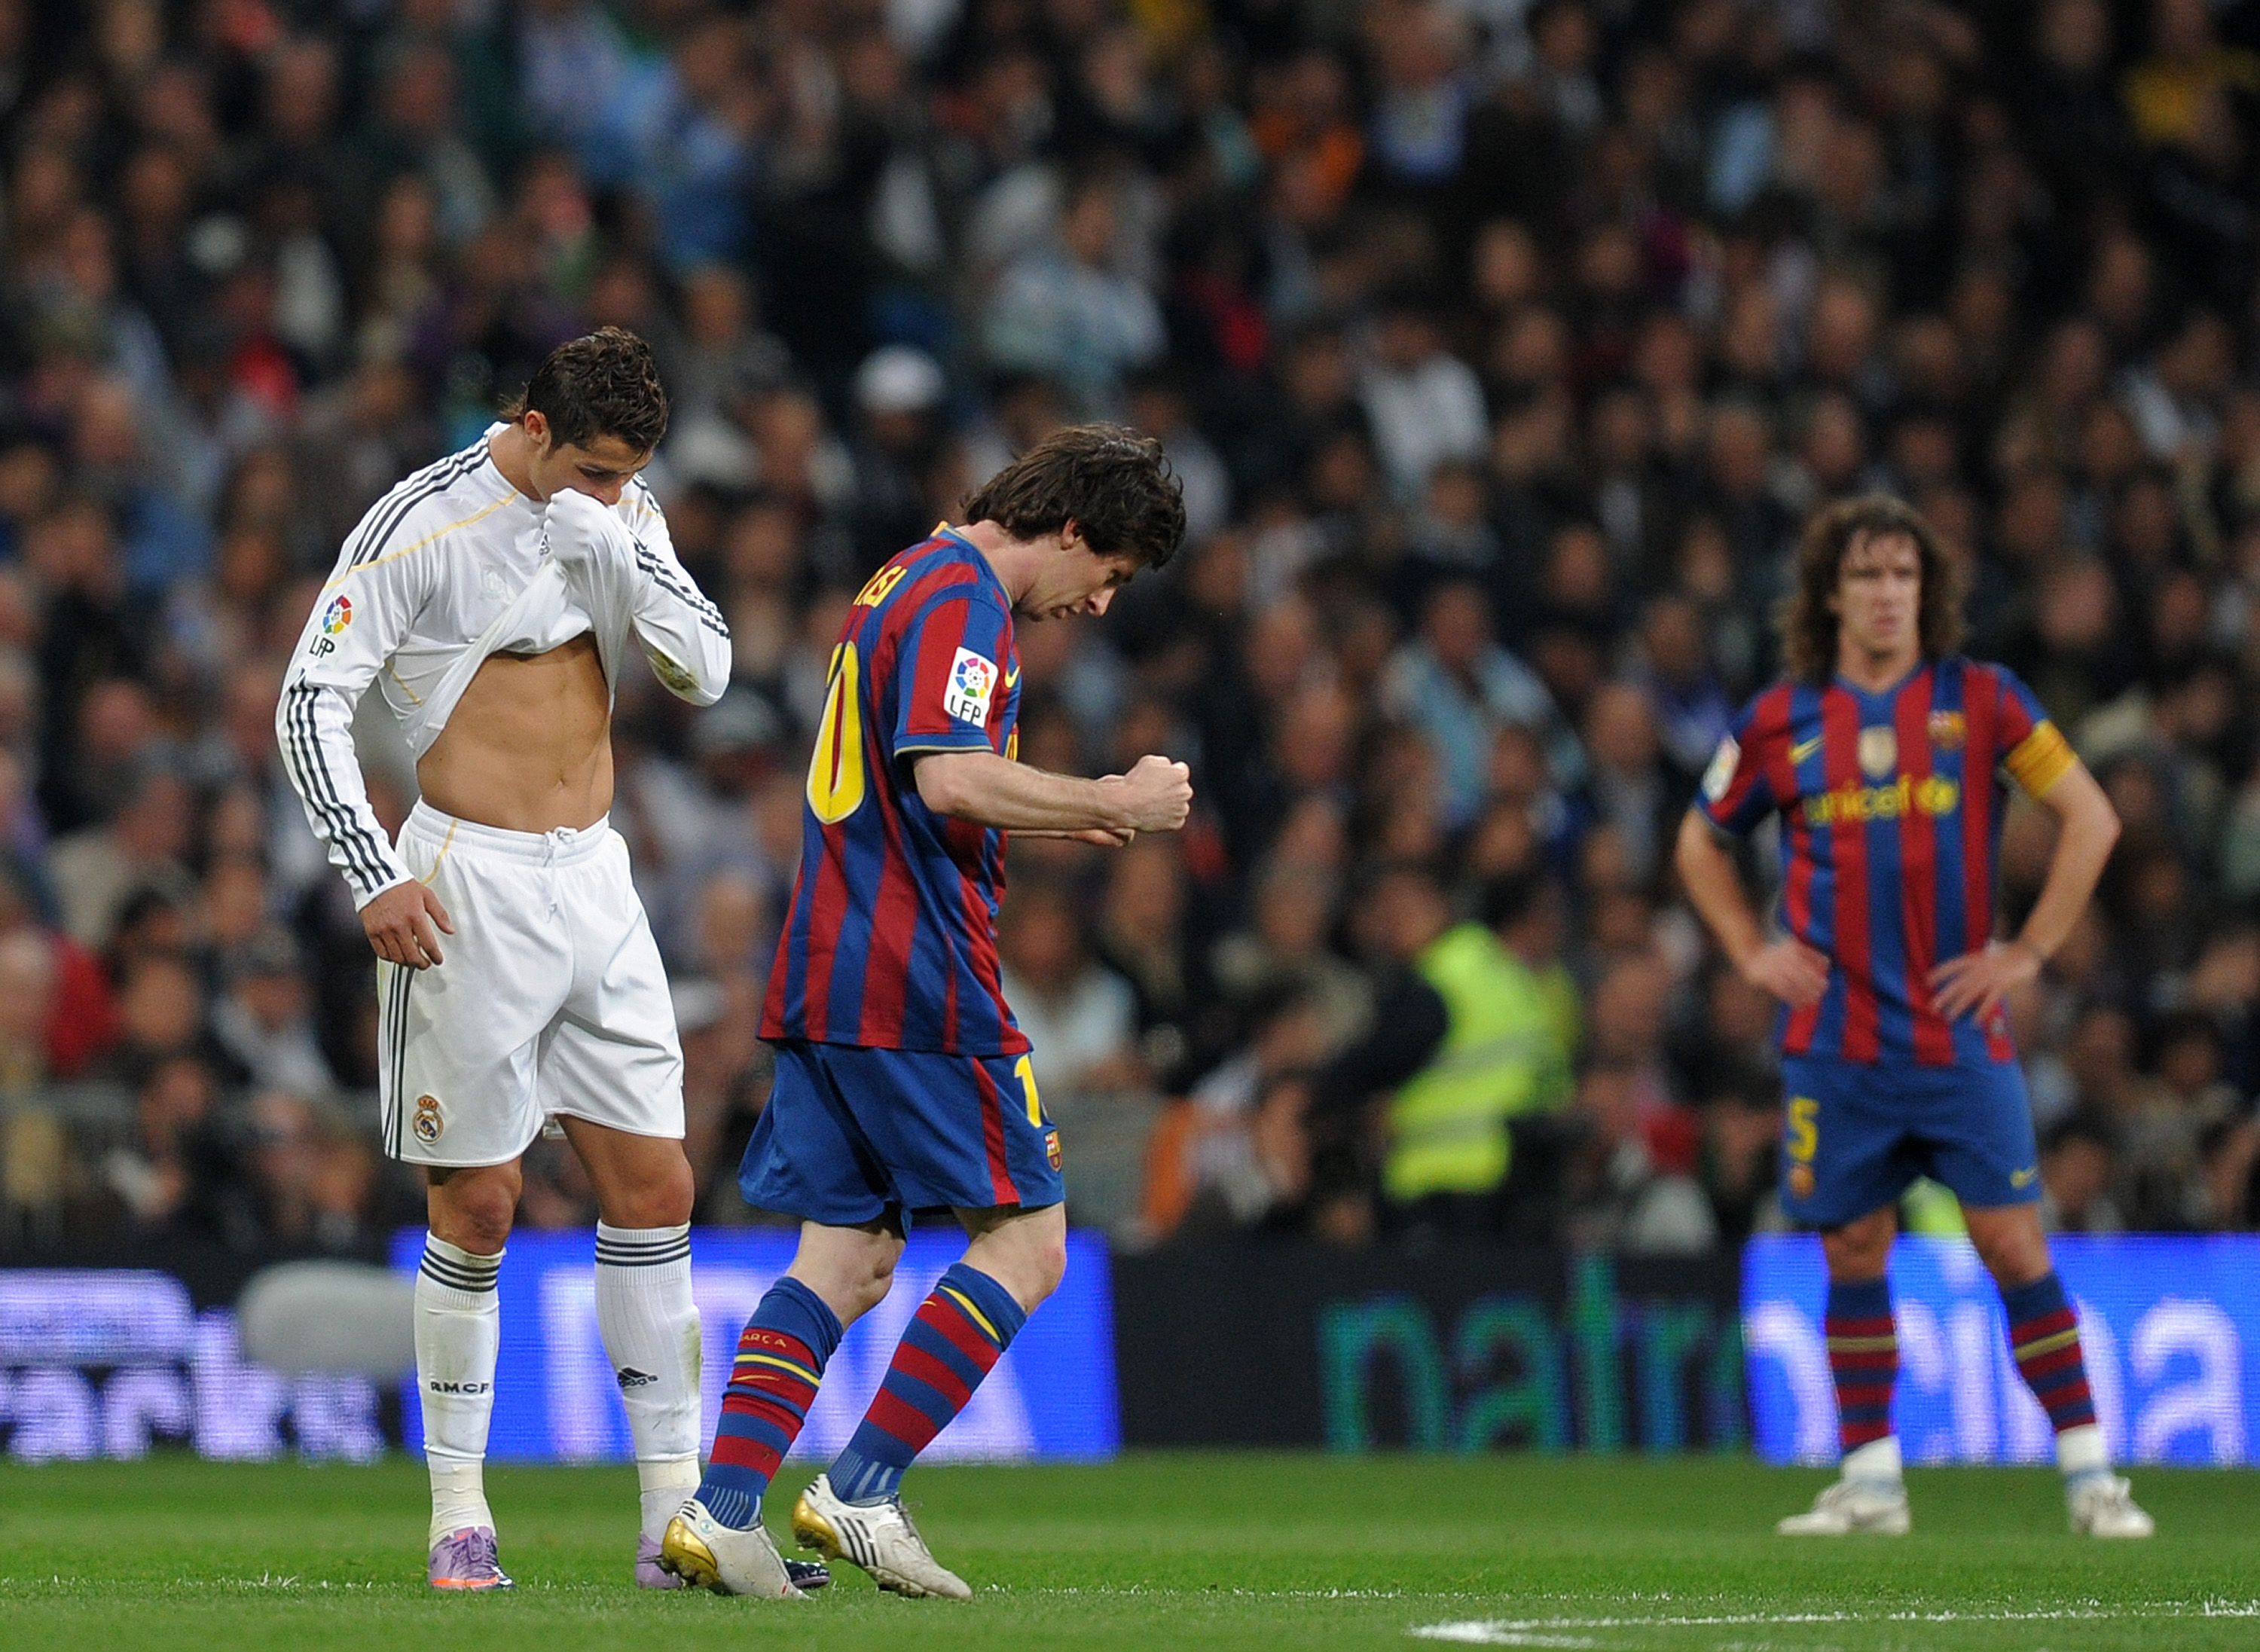 Cristiano Ronaldo v Lionel Messi: Awards, goals and stats compared